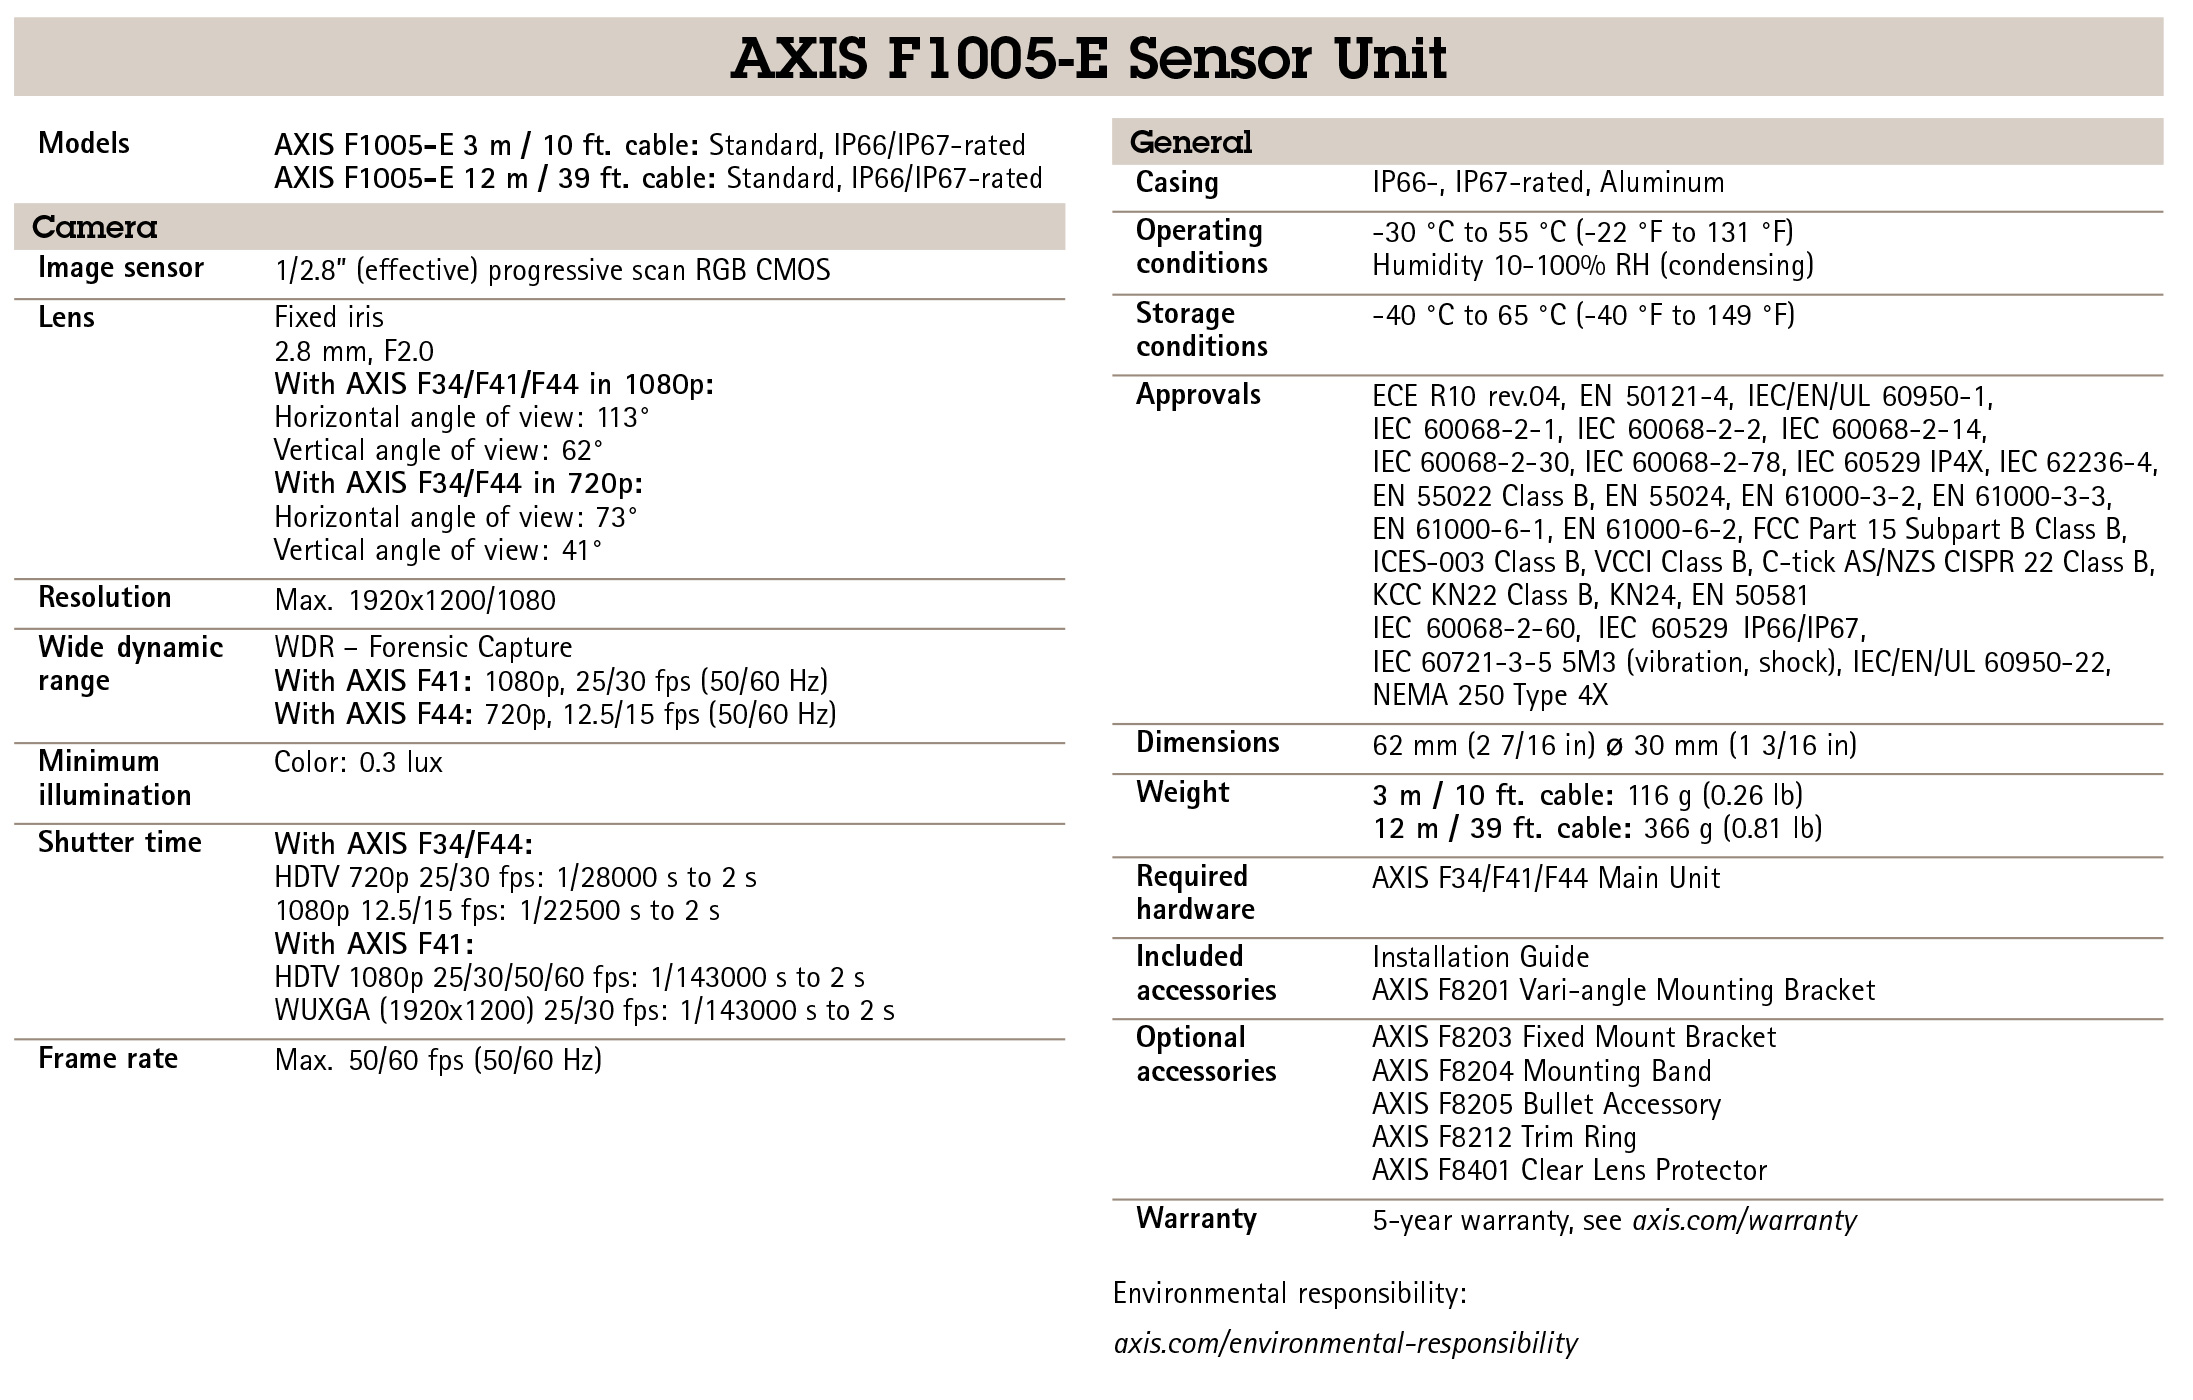 AXIS F1005-E Sensor Unit 12 M